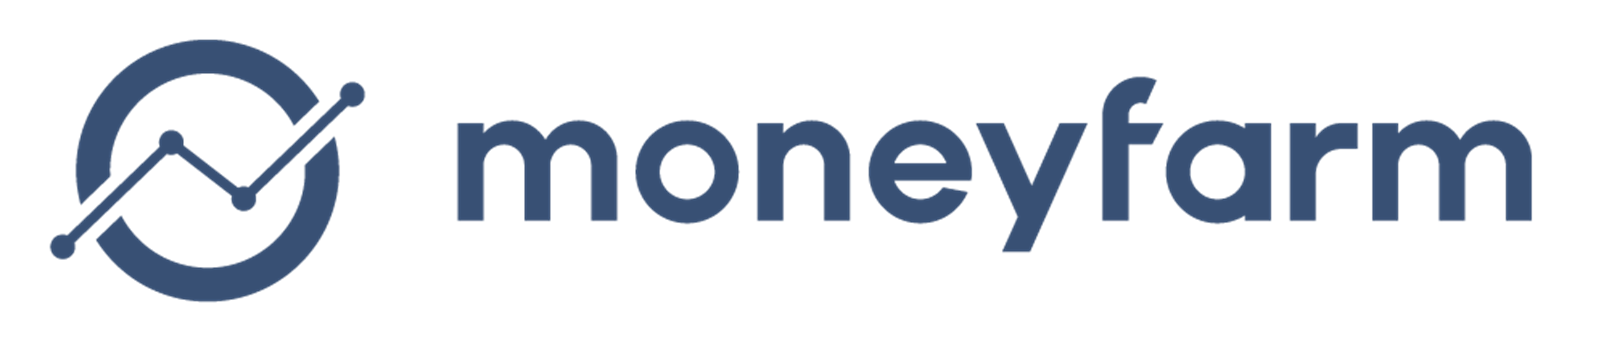 Moneyfarm logo